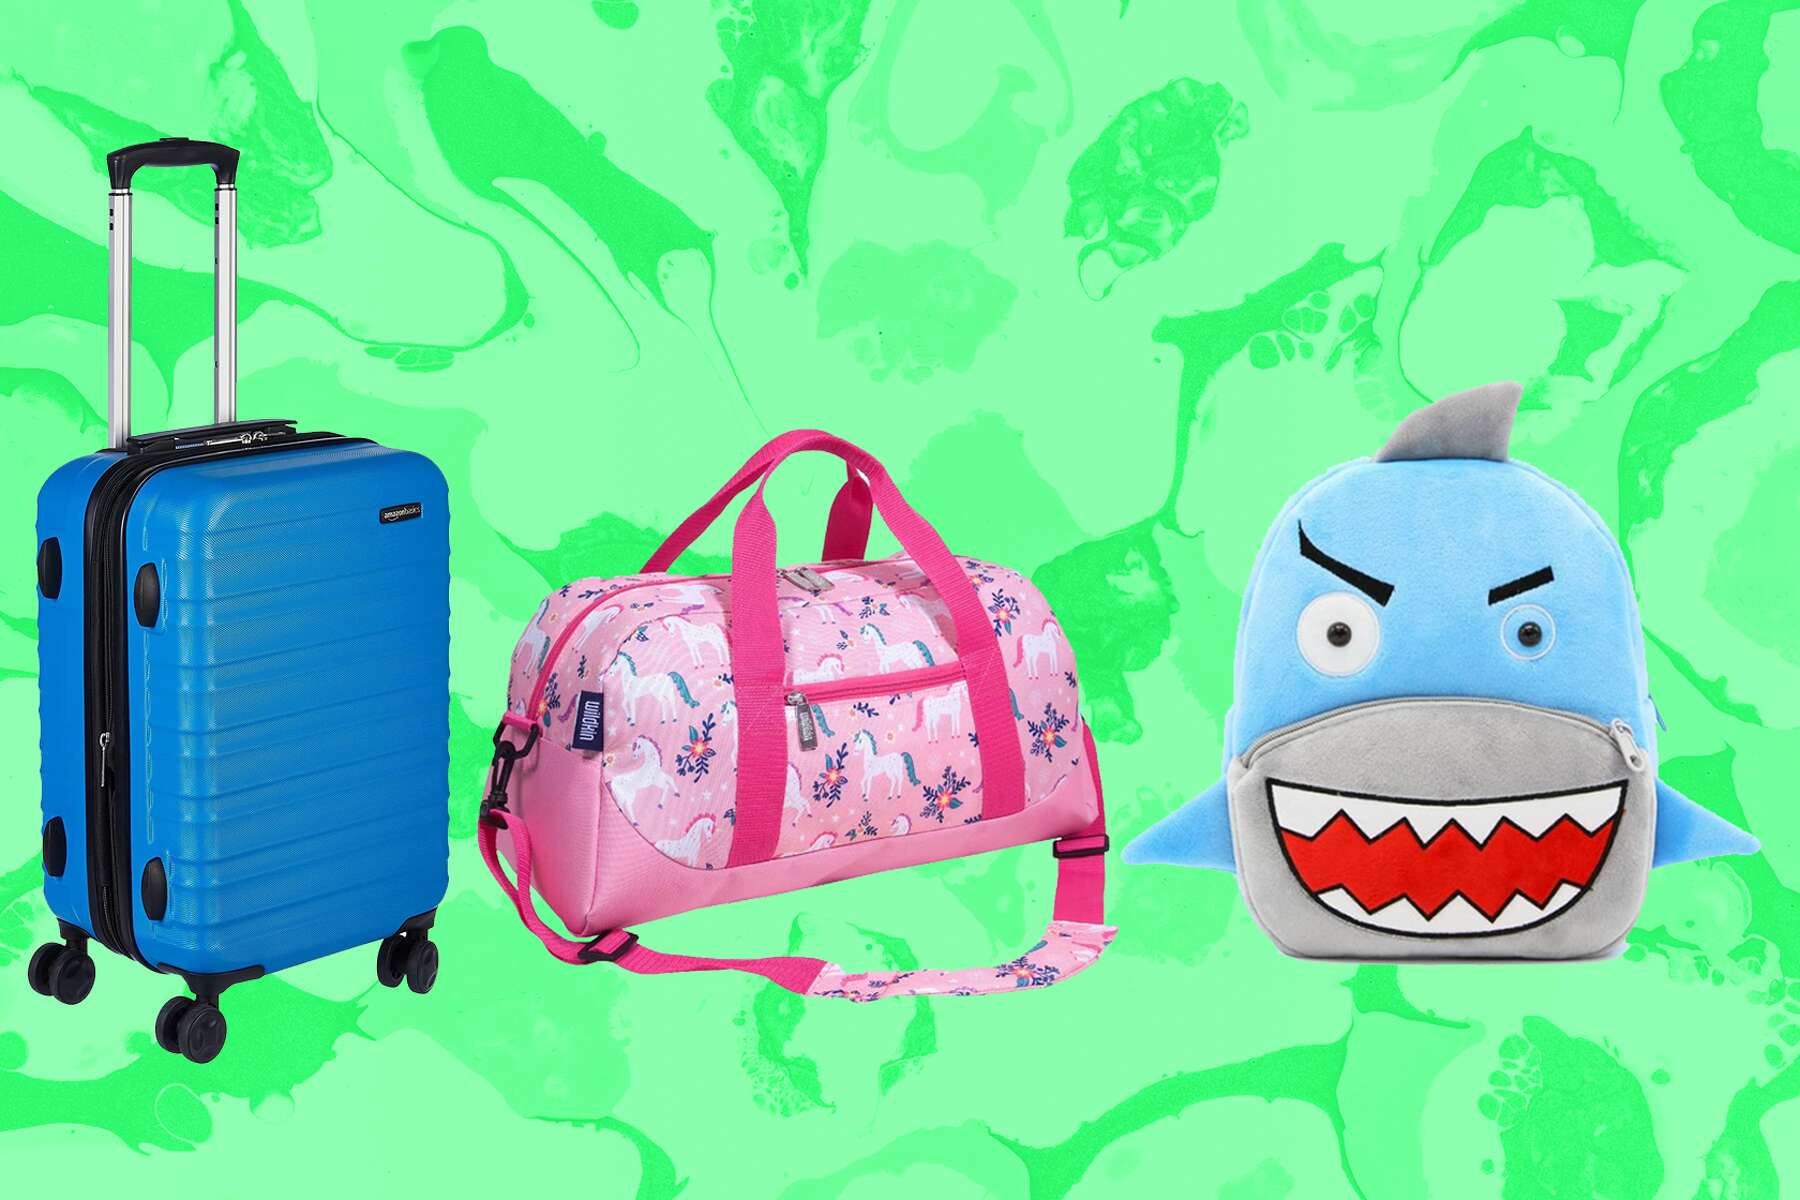 3d Kids Suitcase Car Travel Luggage On Wheels Children Cartoon